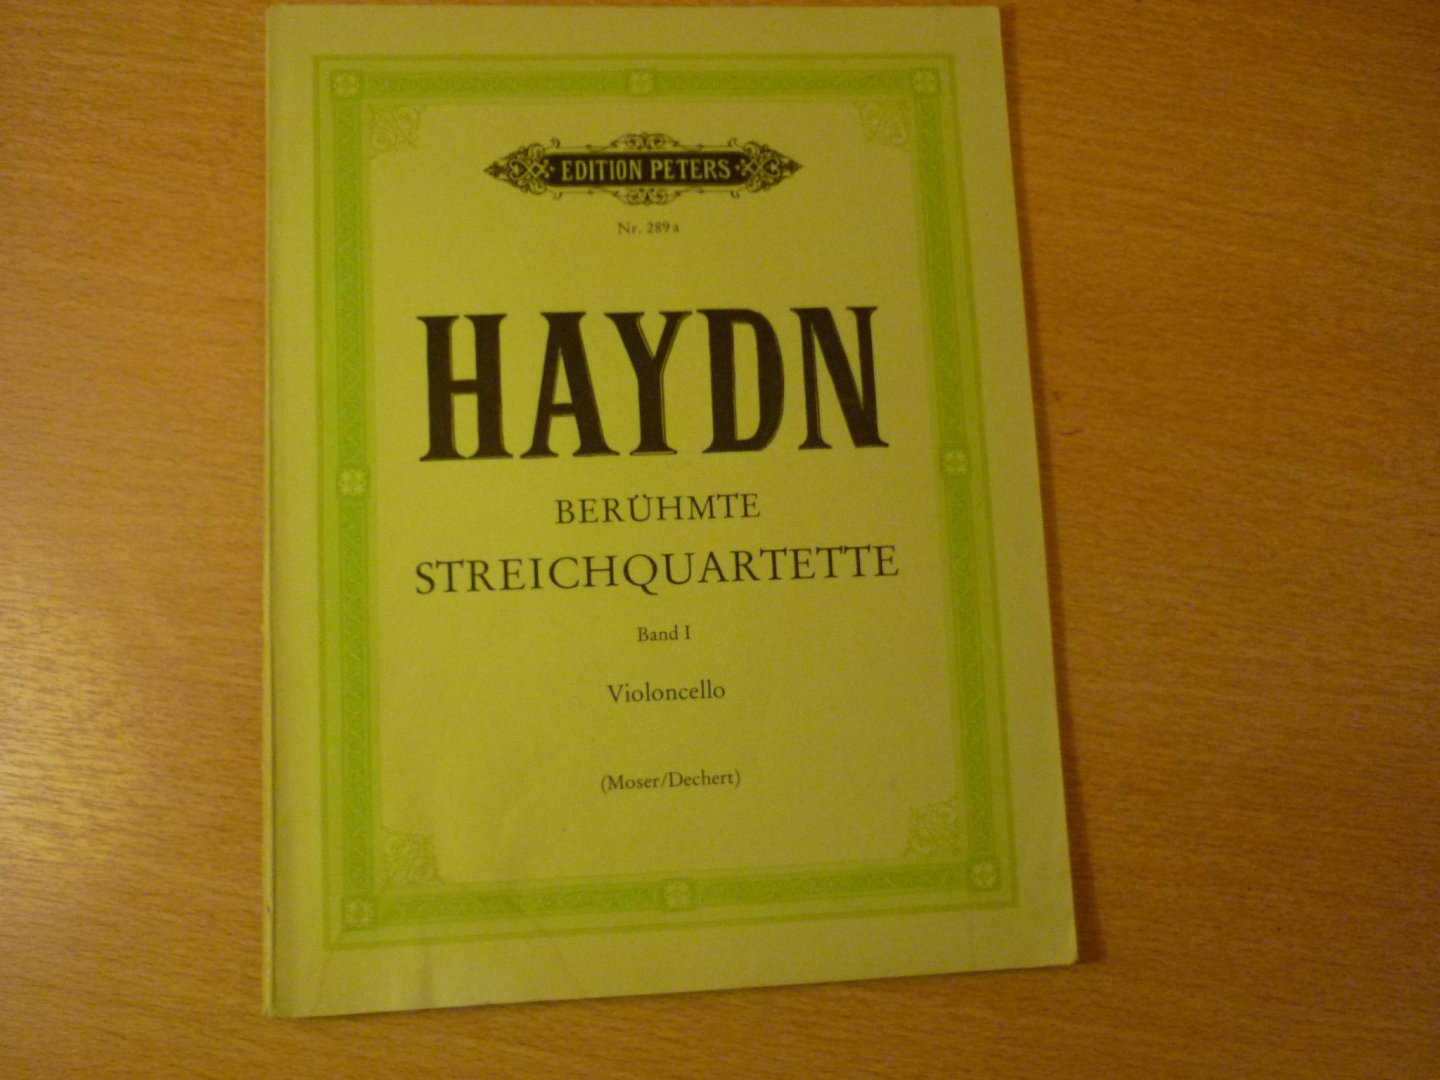 Haydn; Franz Joseph (1732-1809) - Beruhmte StreichQuartette; Band I: Violoncello (Moser / Dechert)